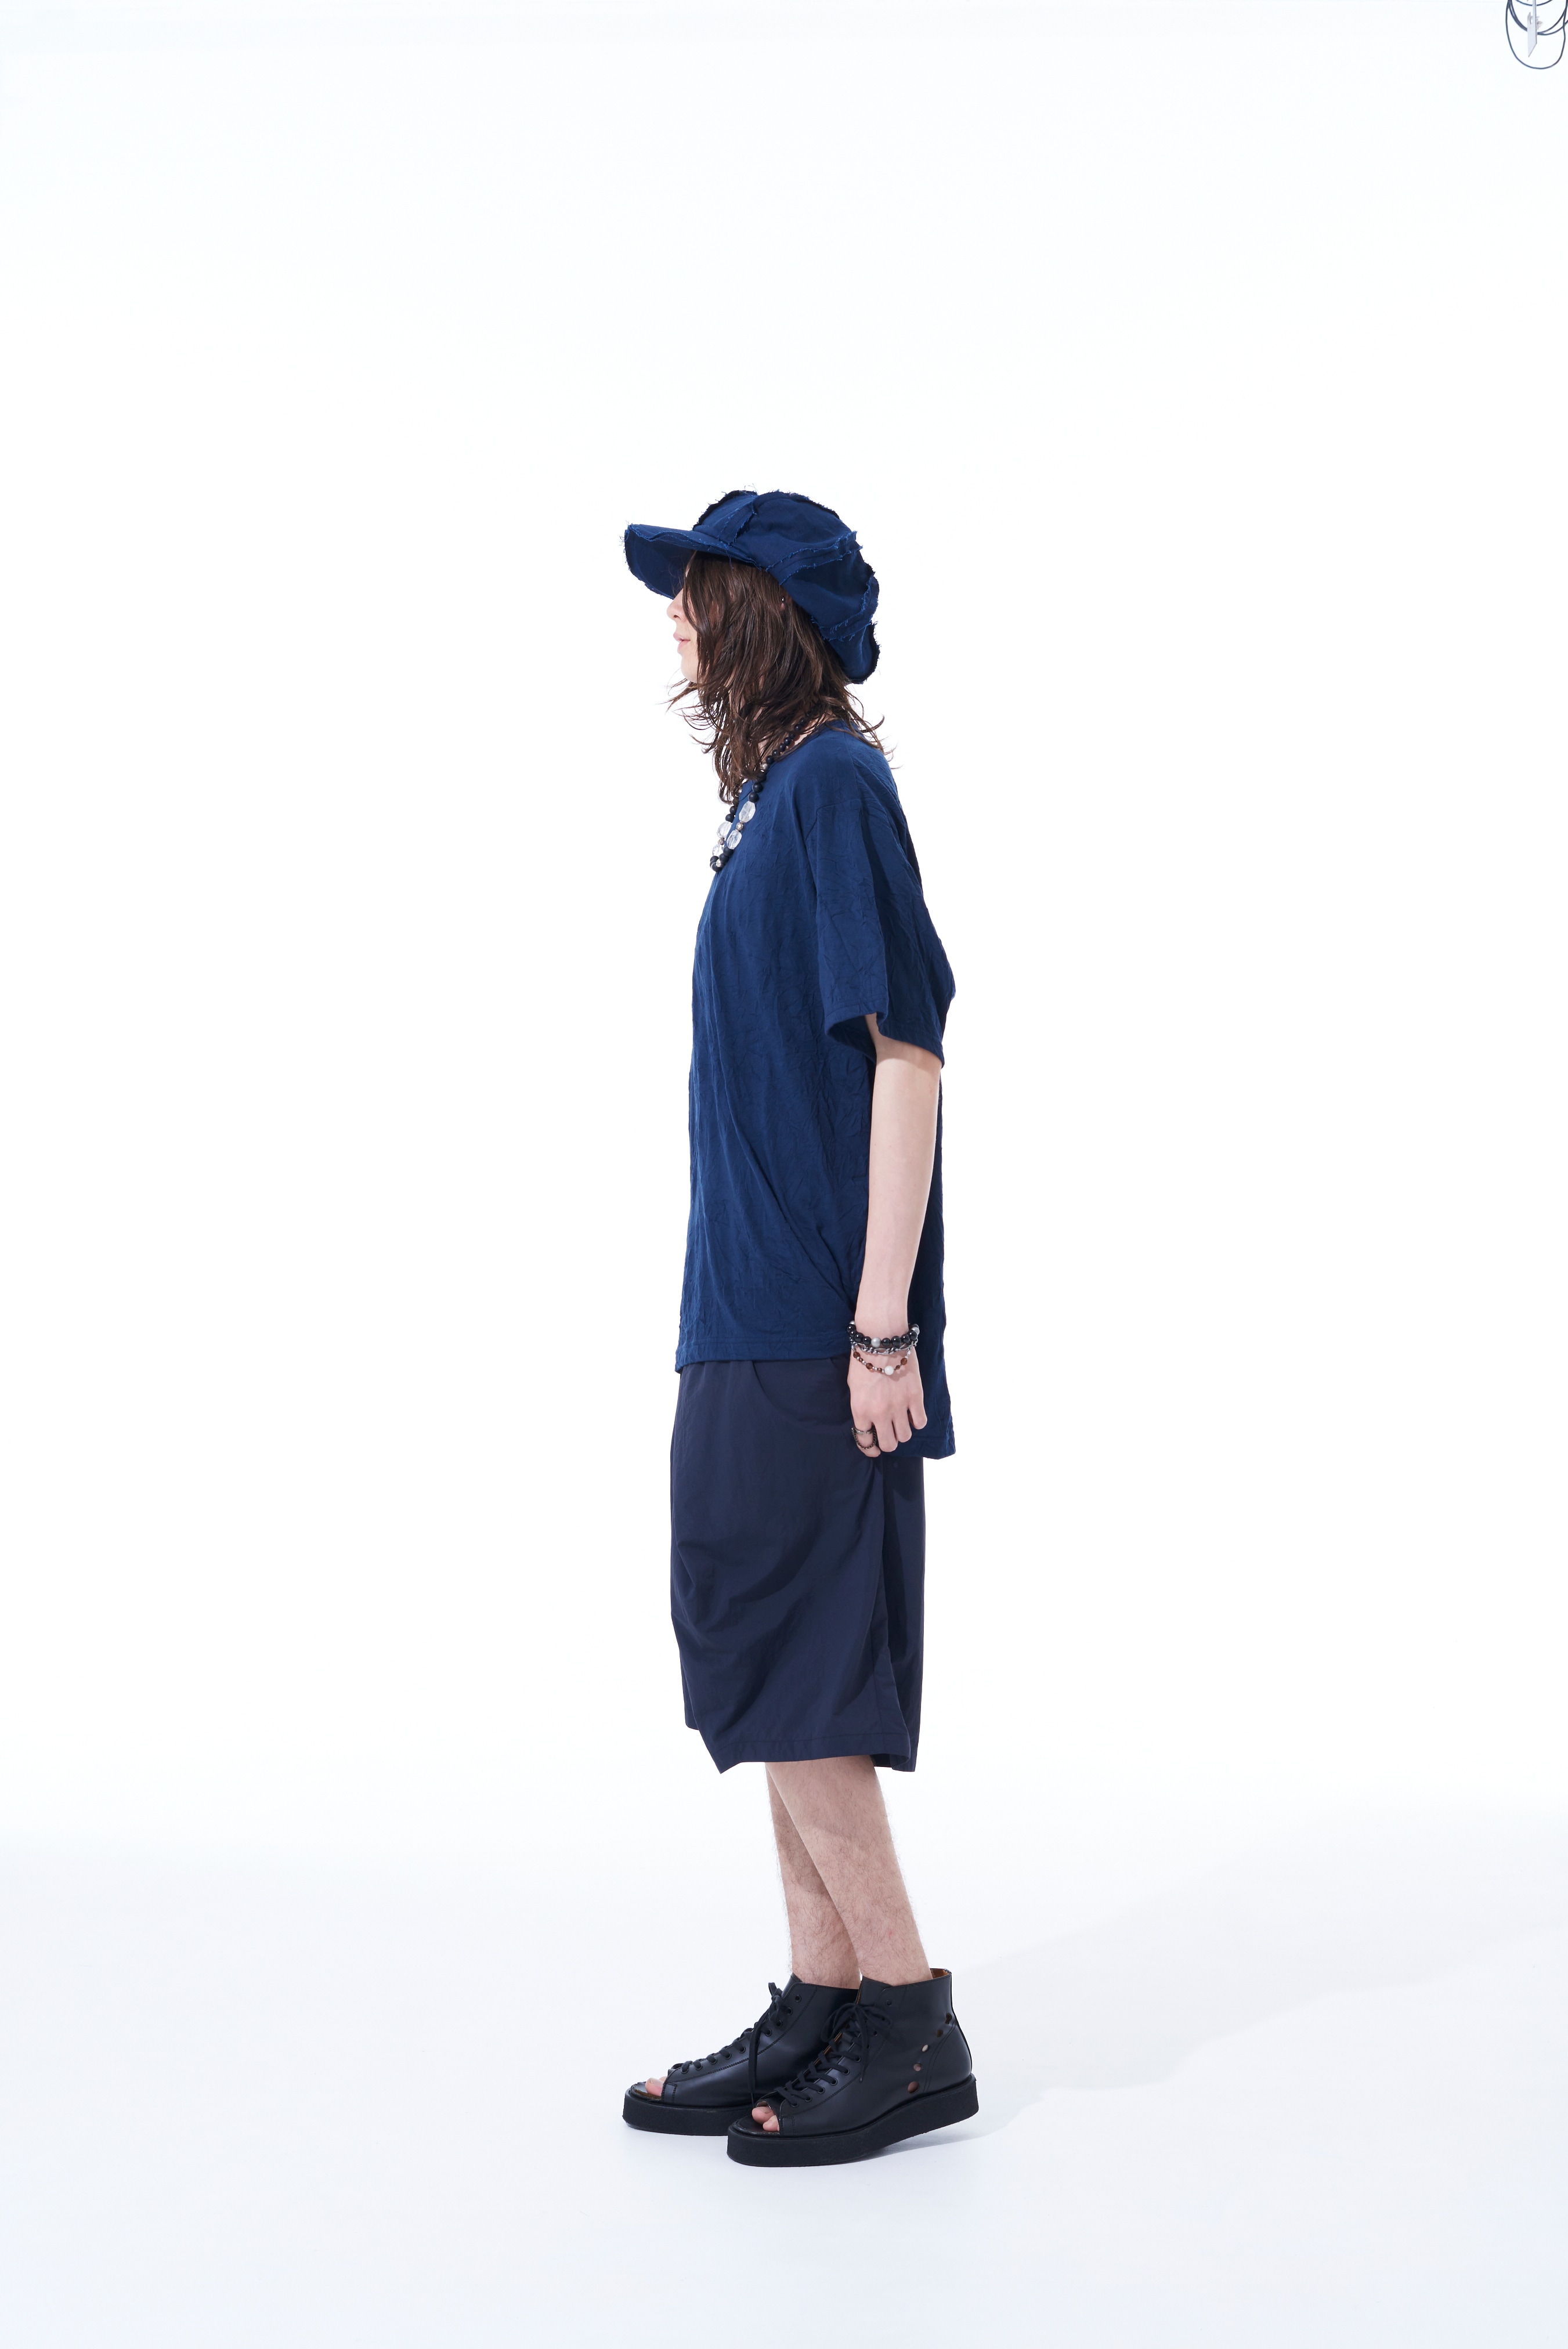 NYLON TAFFETA LEFT FRONT CLOTH FOLDS OVER DESIGN 6-QUARTER-LENGTH PANTS